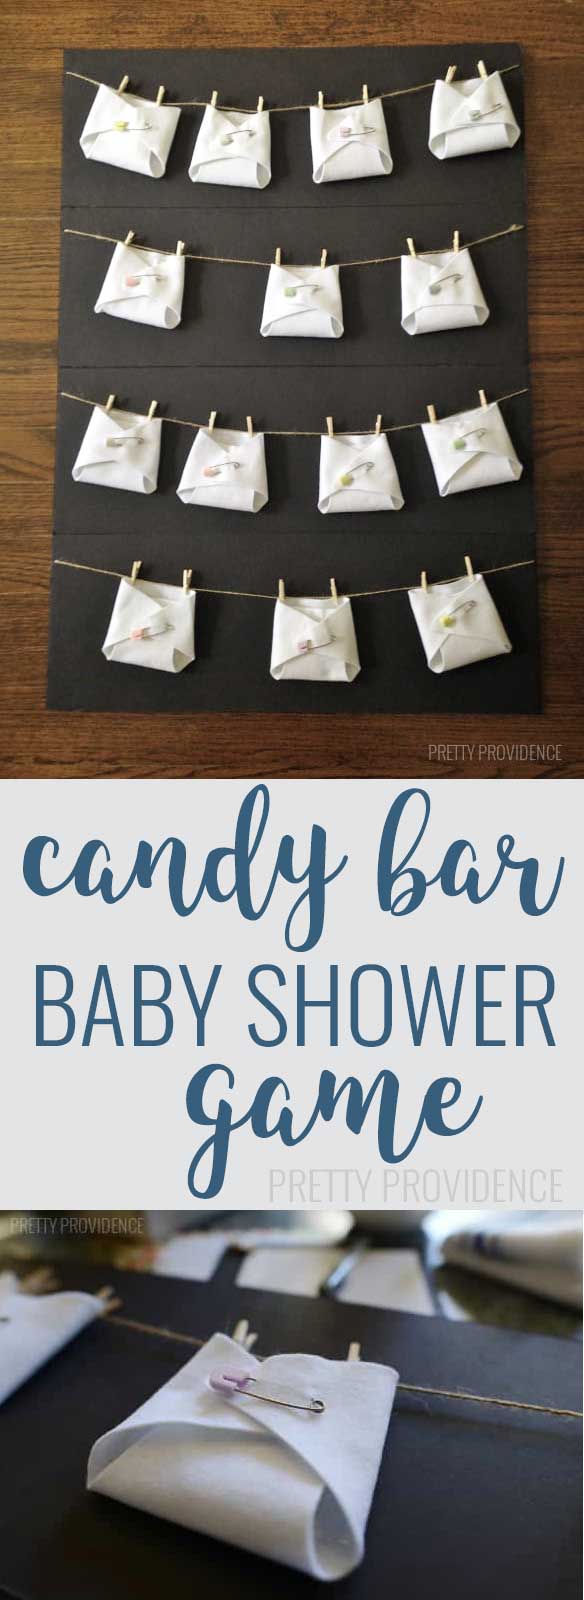 candy bar diaper game, baby shower ideas, cute baby shower, best baby shower ideas, baby shower cake, fun games for baby shower, baby shower food